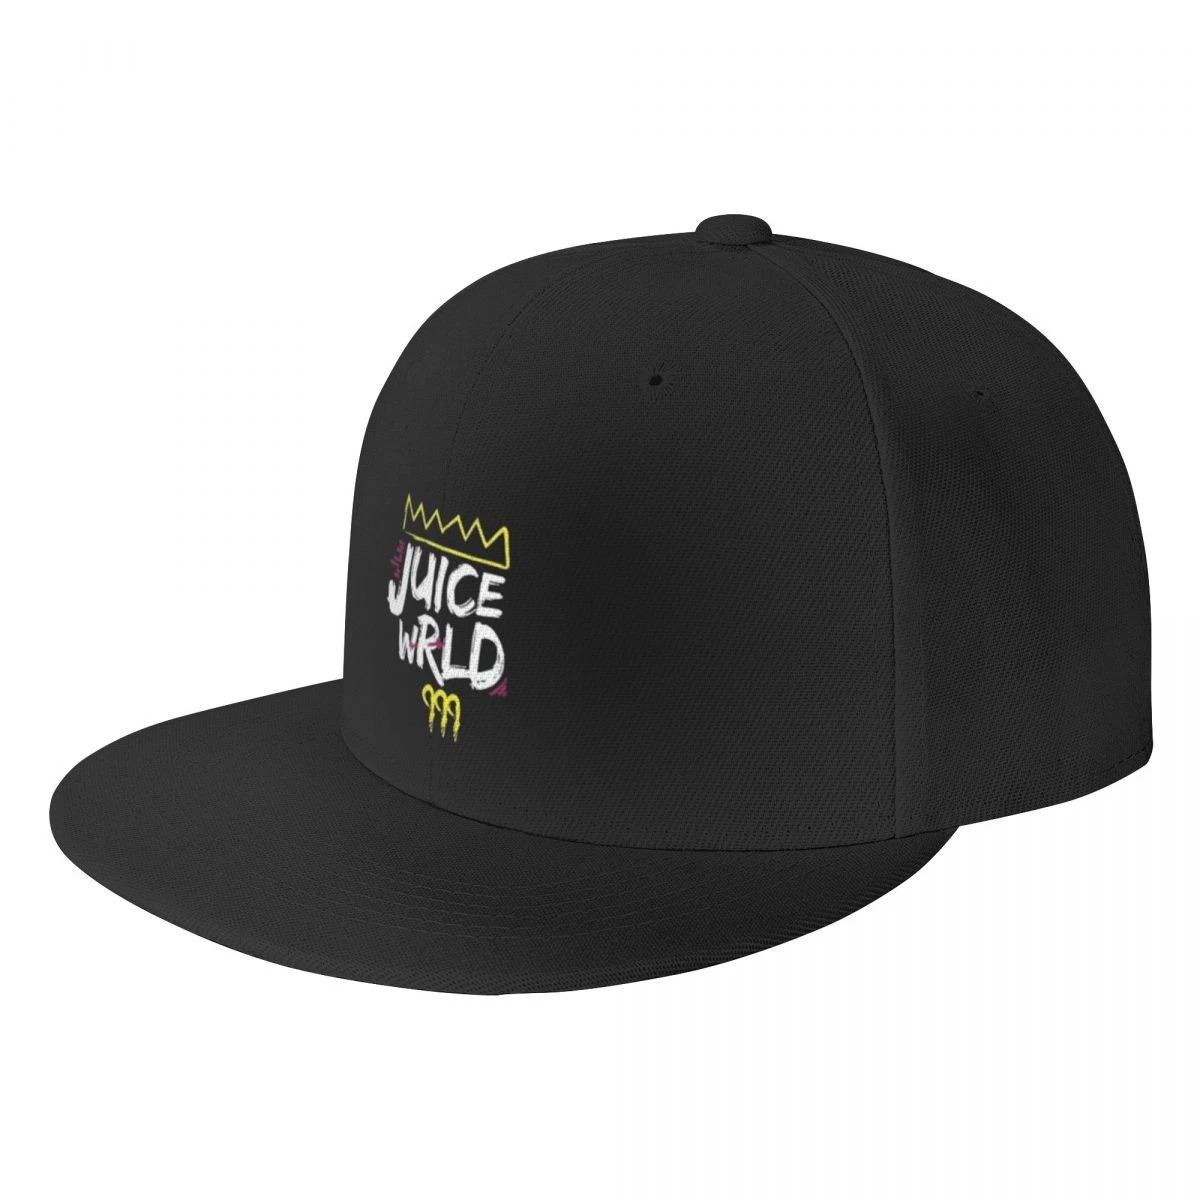 Juice Wrld 999 Merch Cap Hip Hop 9 - Juice Wrld Store